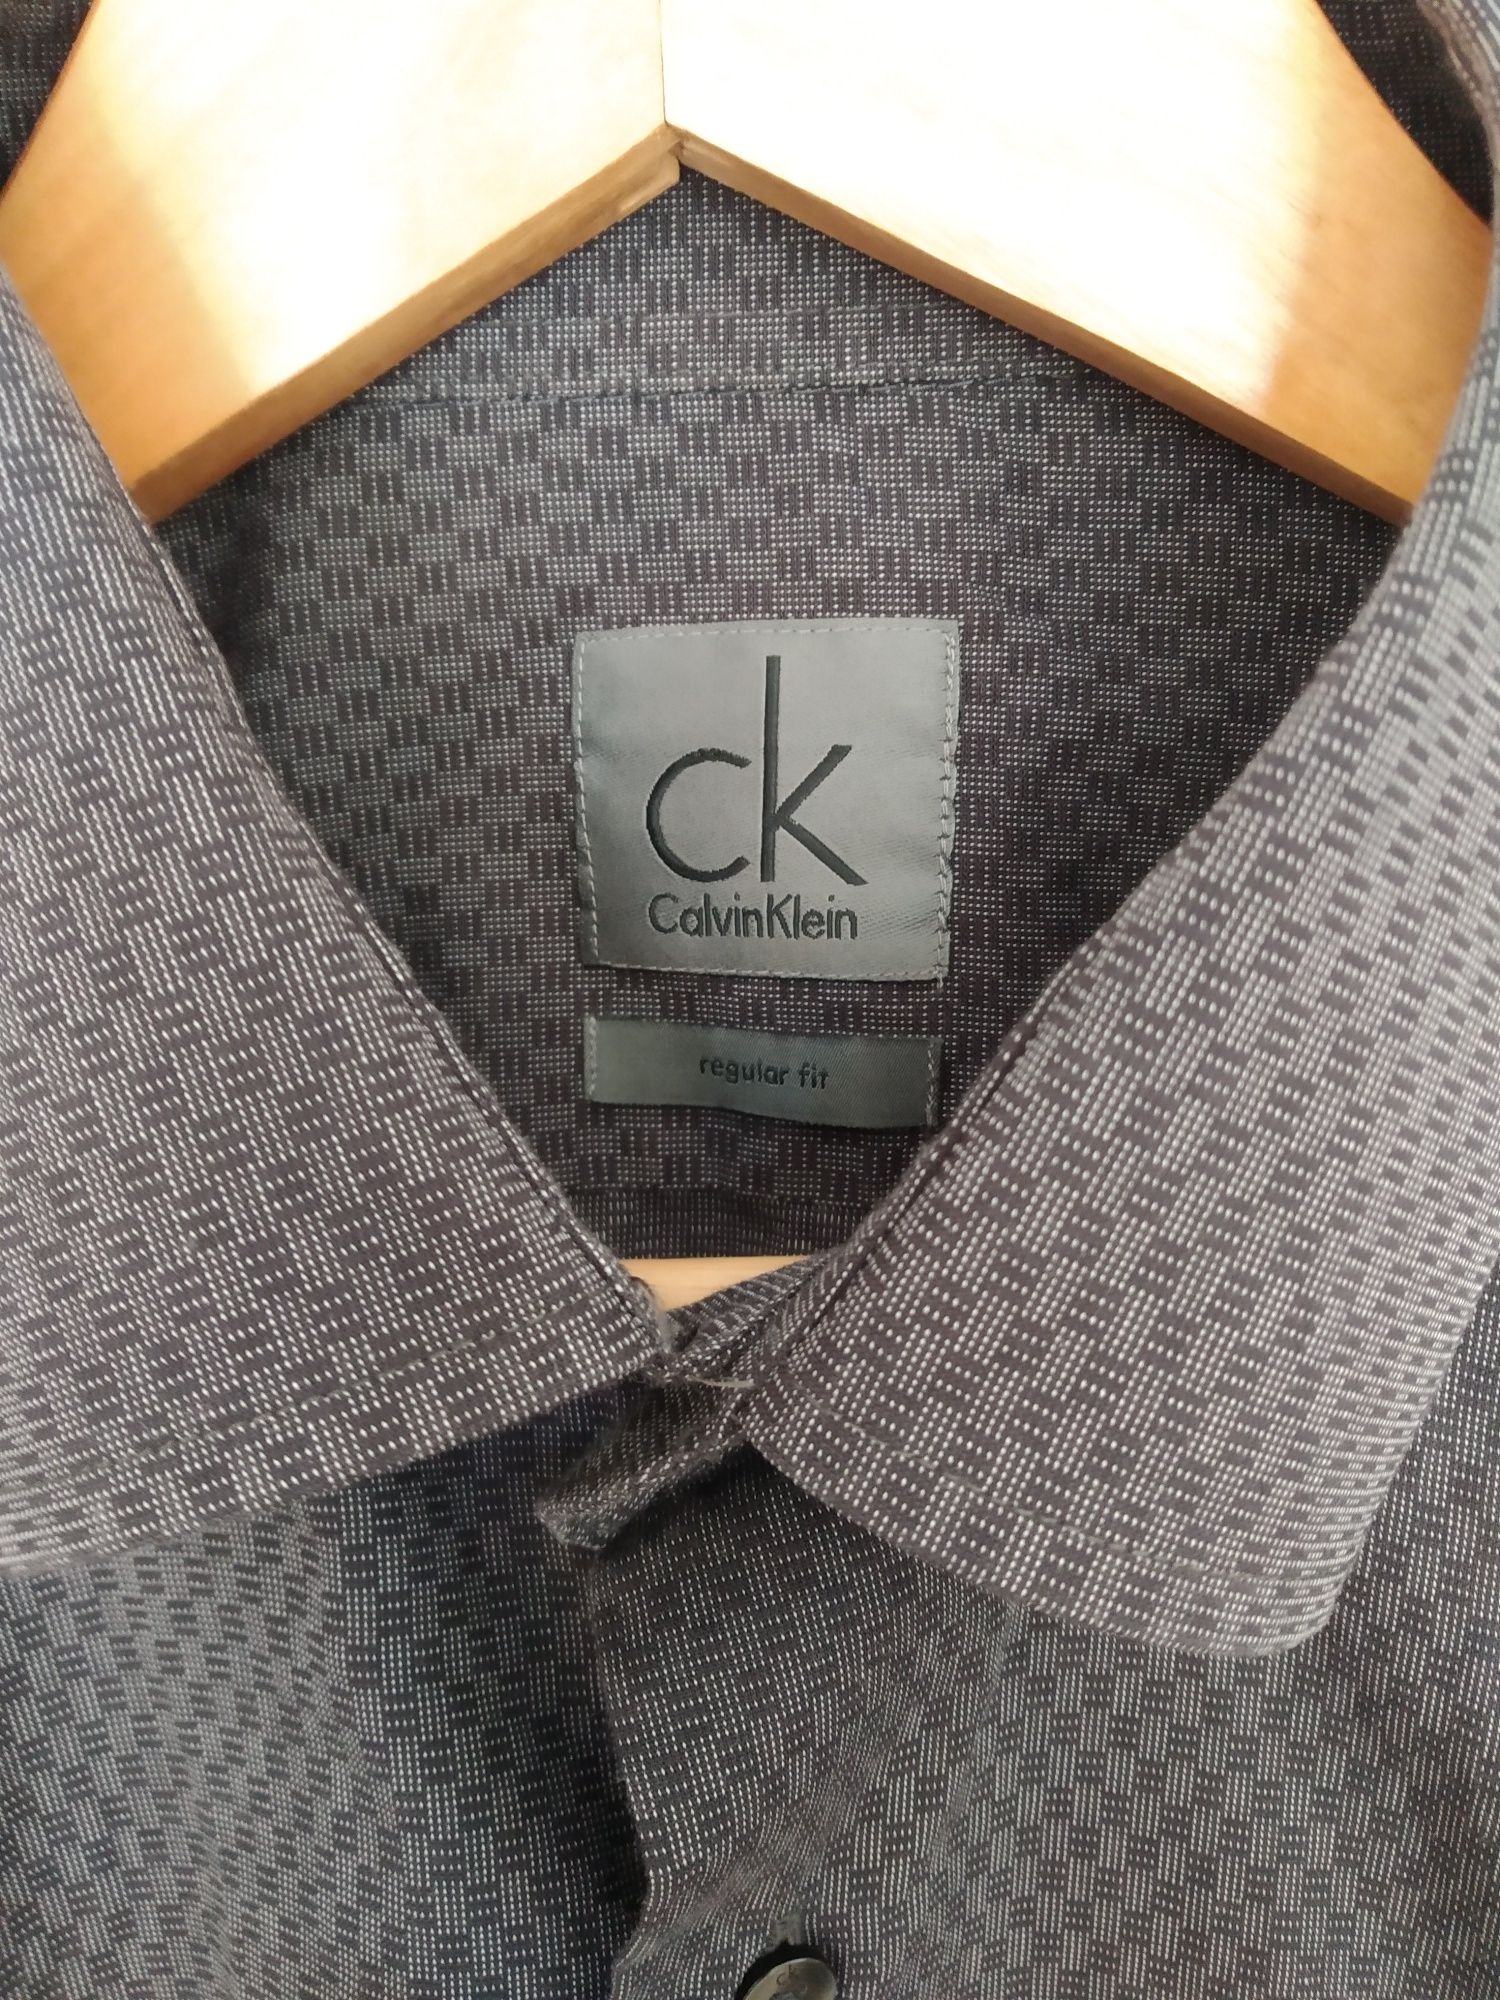 Elegancka koszula, oryginalna,Calvin Klein!